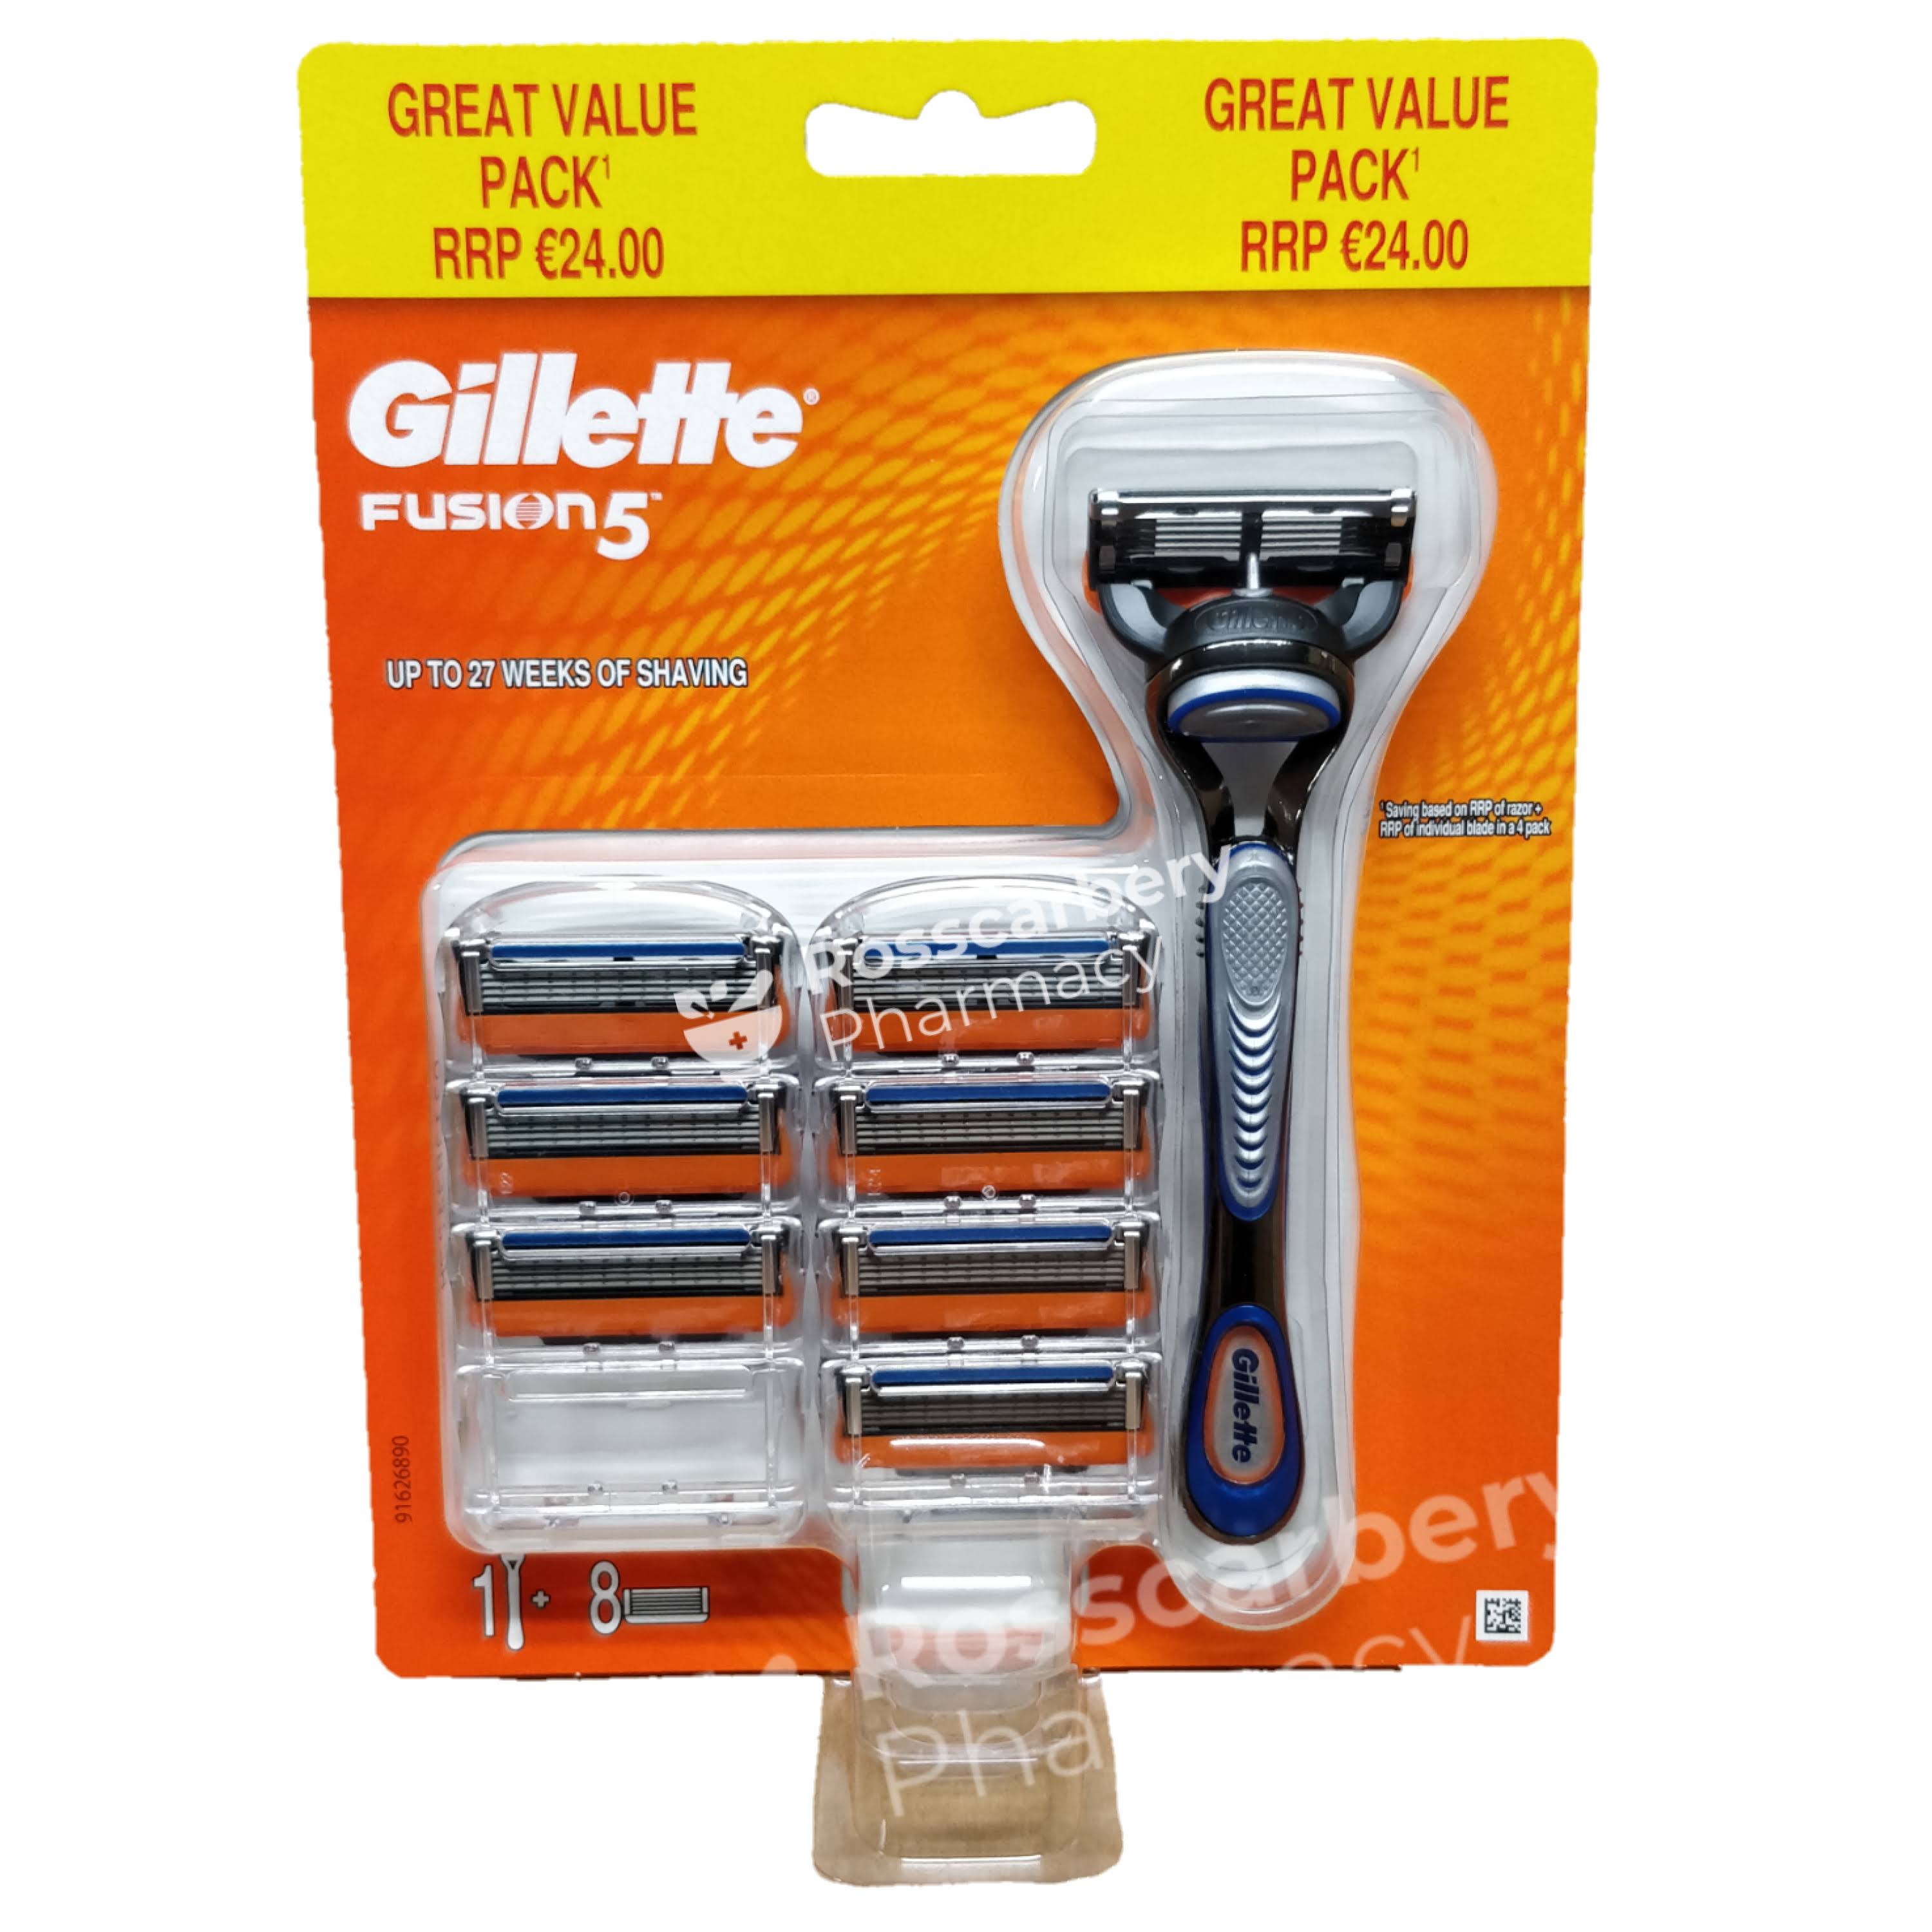 Gillette Fusion5 Men's Razor - 7 Blades Refills